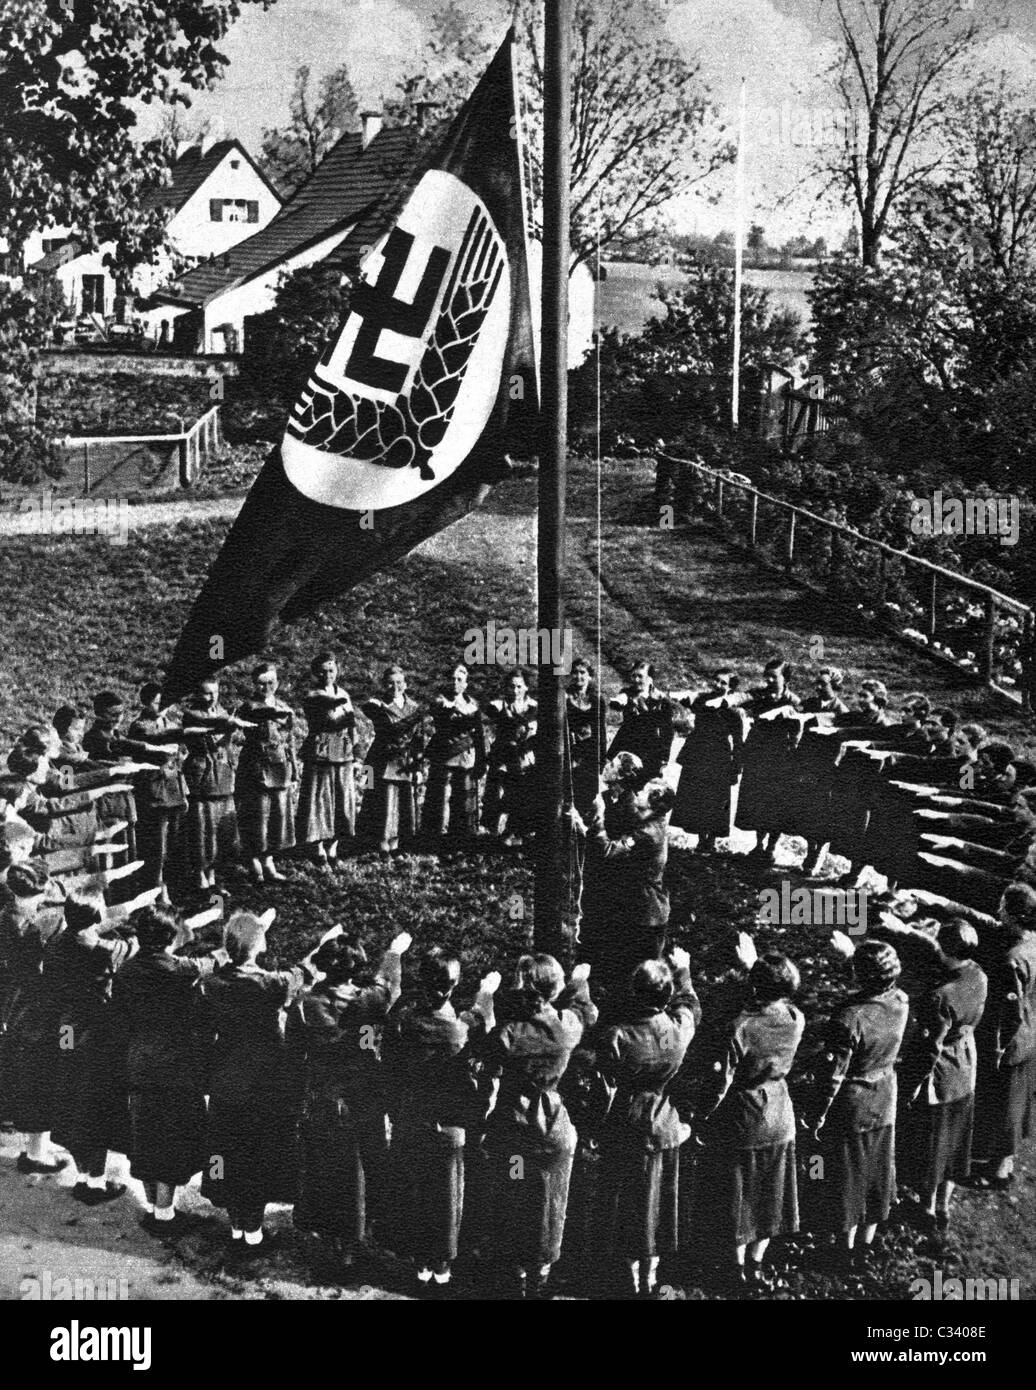 RADWJ members give the Hitler salute at the colours ceremony, raising the RADWJ flag. Stock Photo